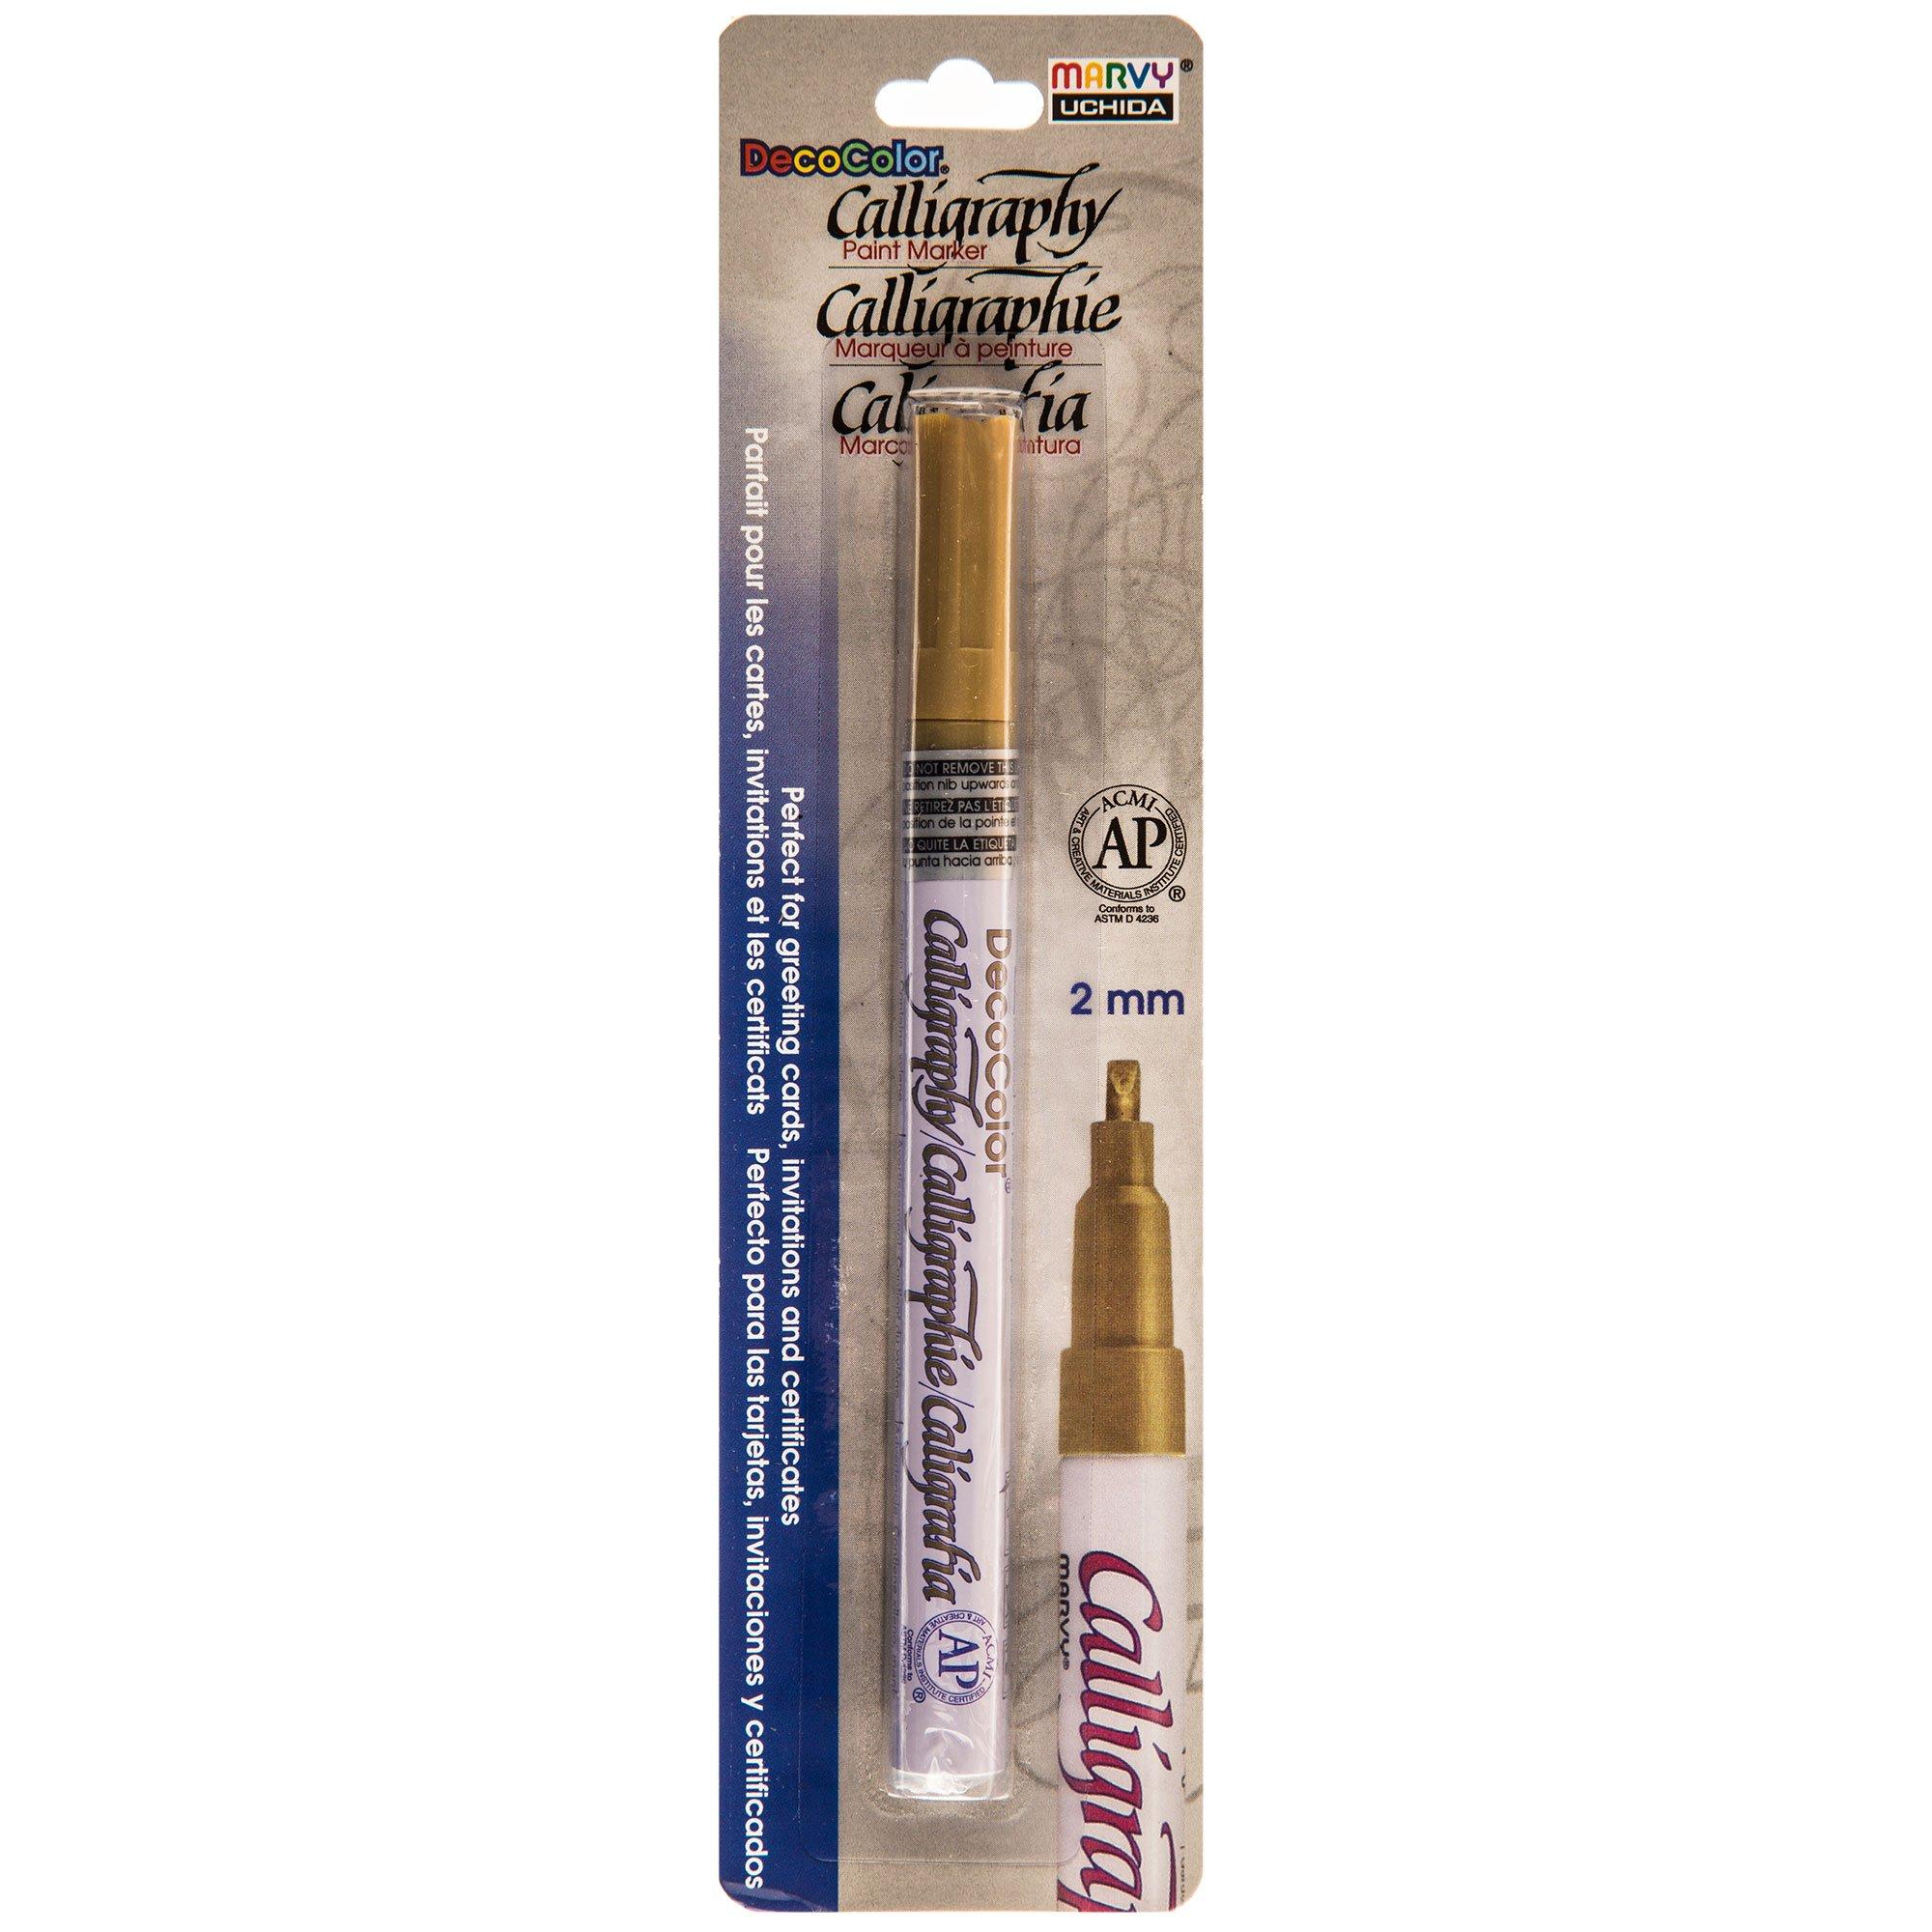  Pentel Sunburst Metallic Gel Pen, Medium Tip, Gold